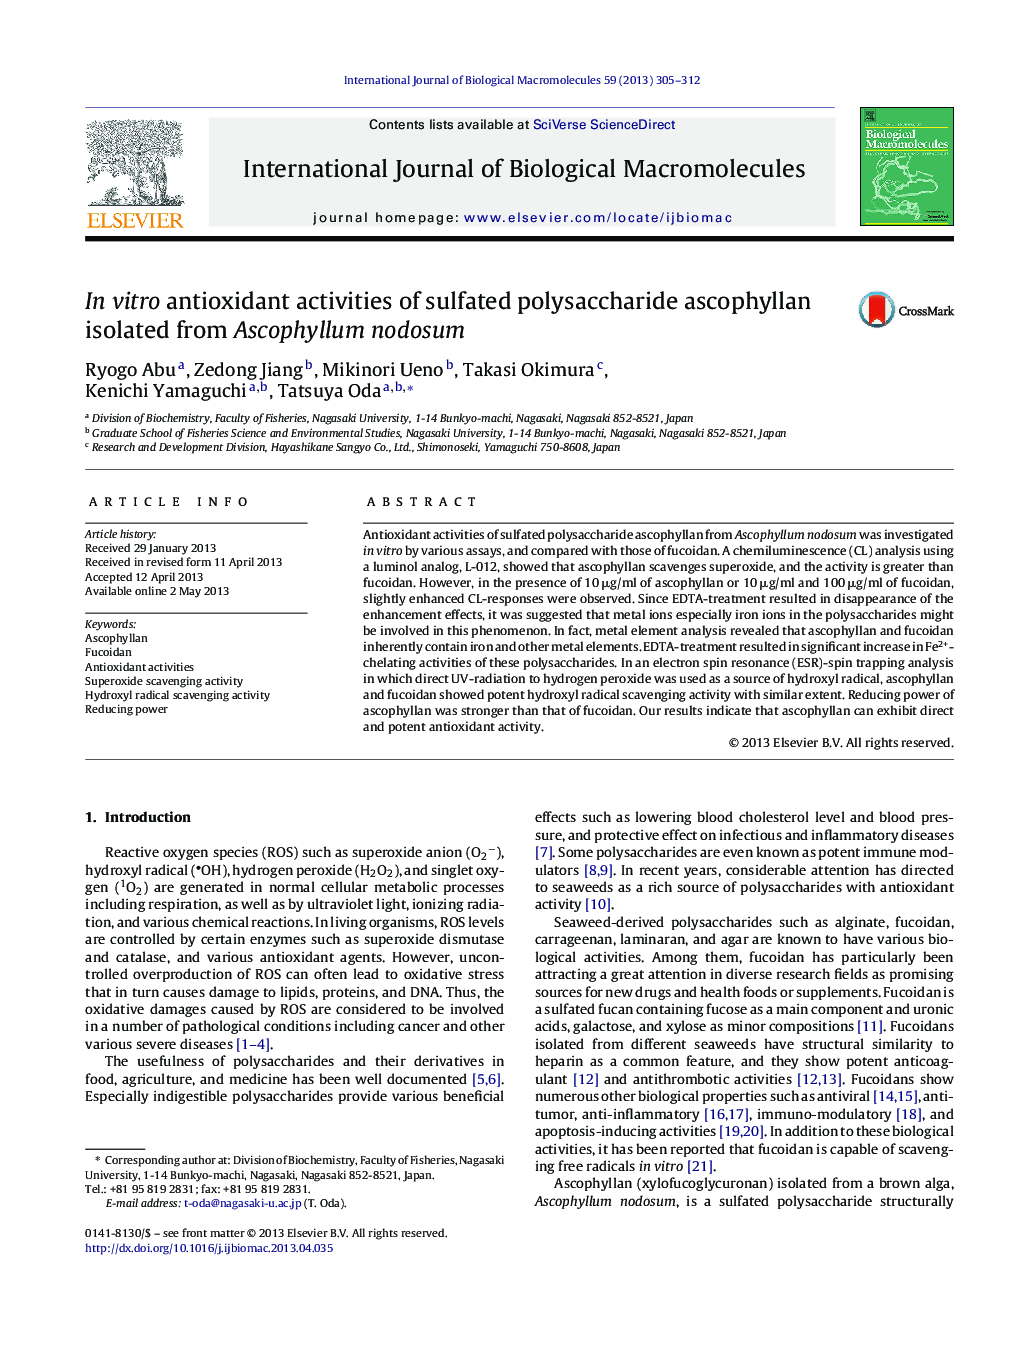 In vitro antioxidant activities of sulfated polysaccharide ascophyllan isolated from Ascophyllum nodosum